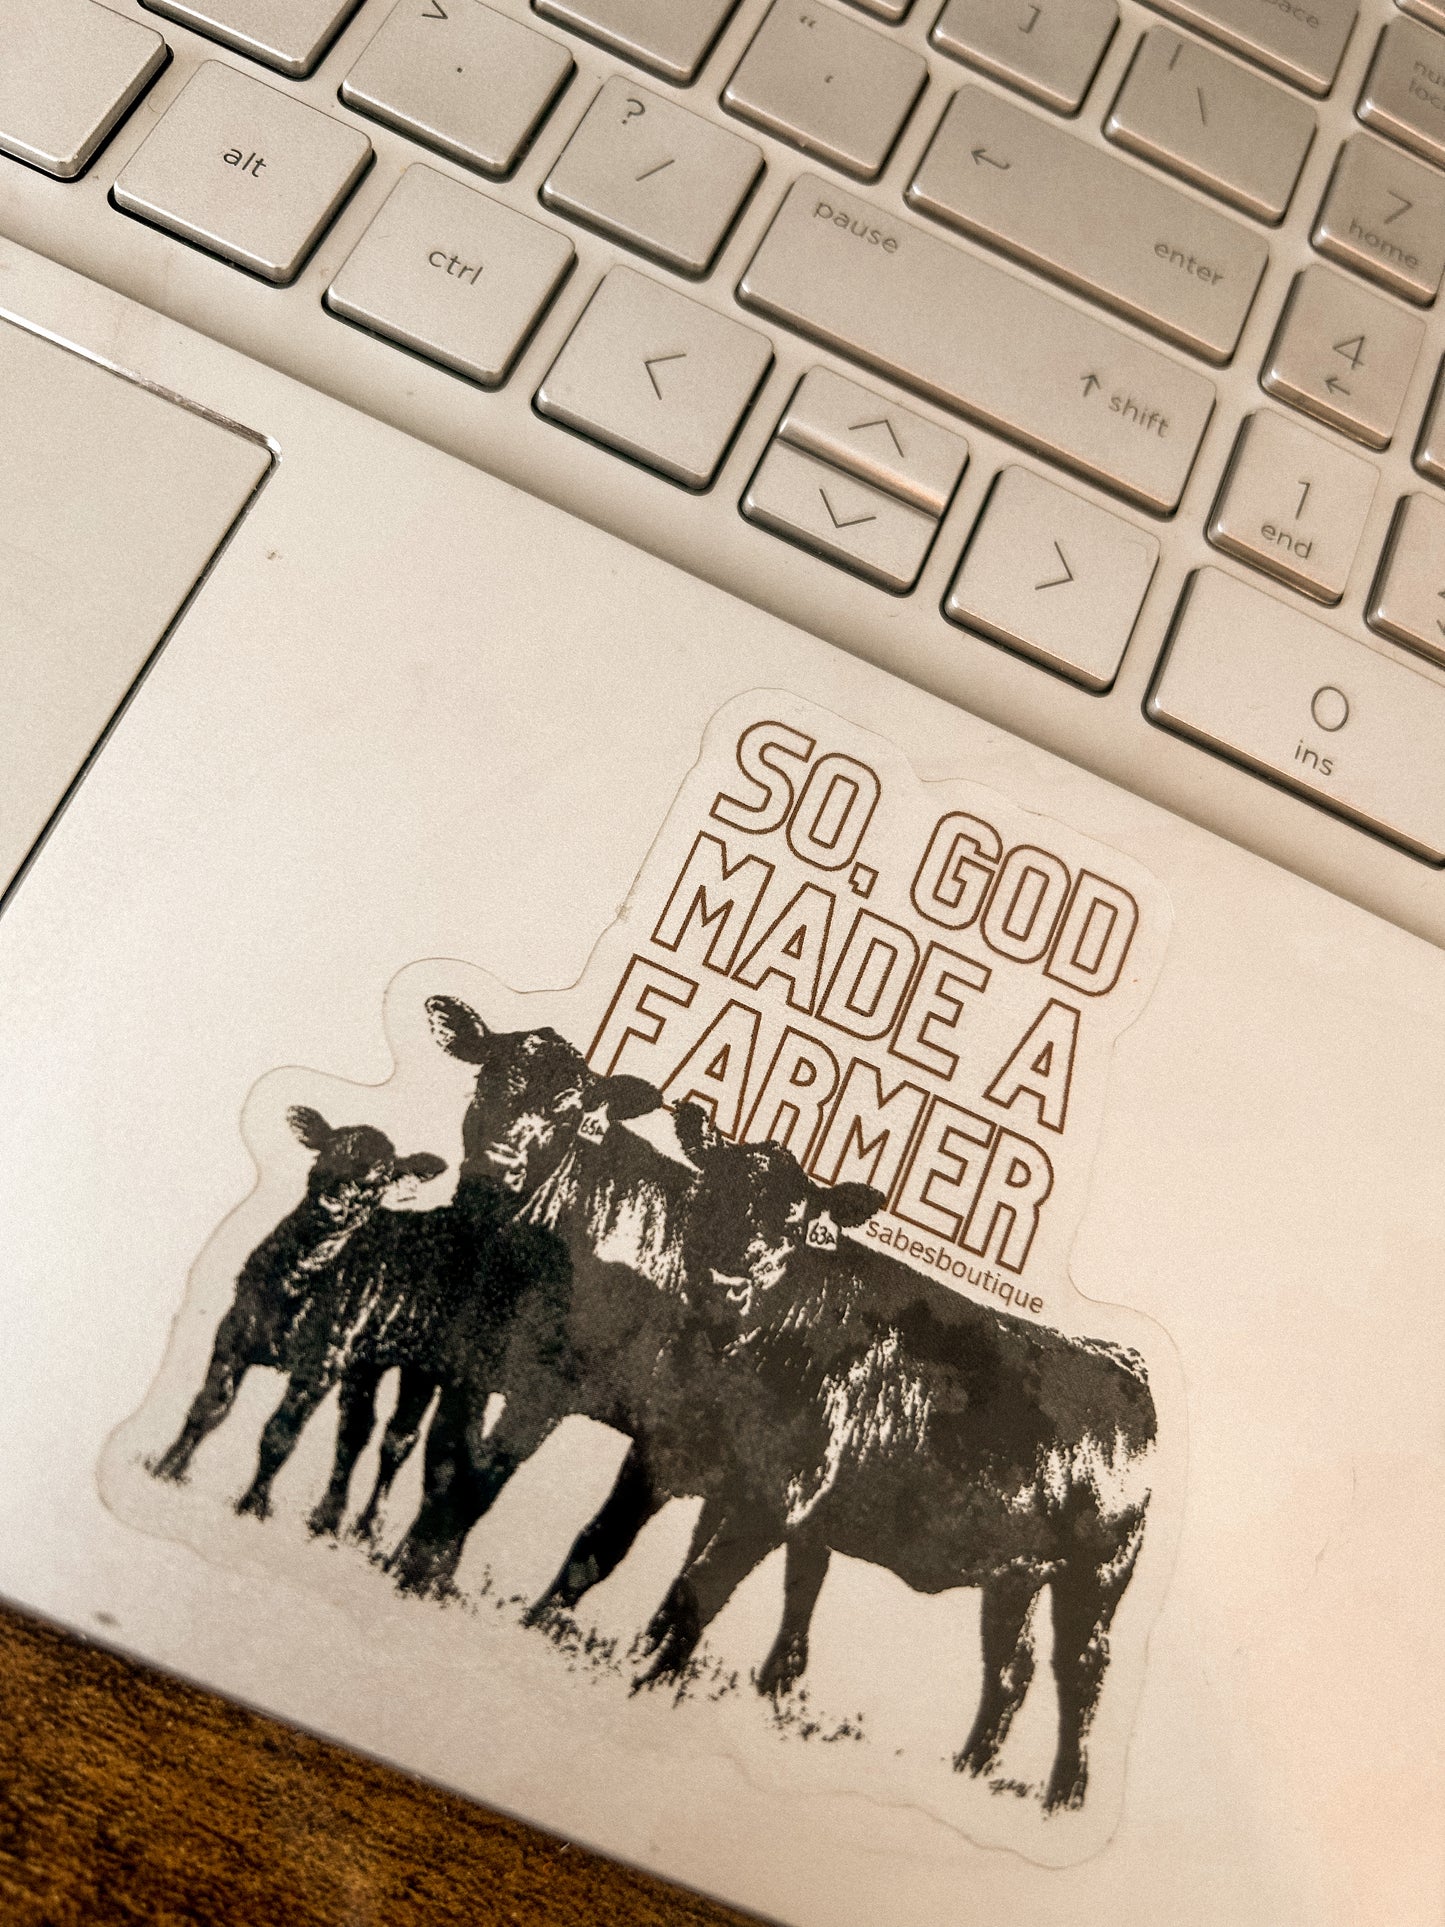 so god made a farmer sticker